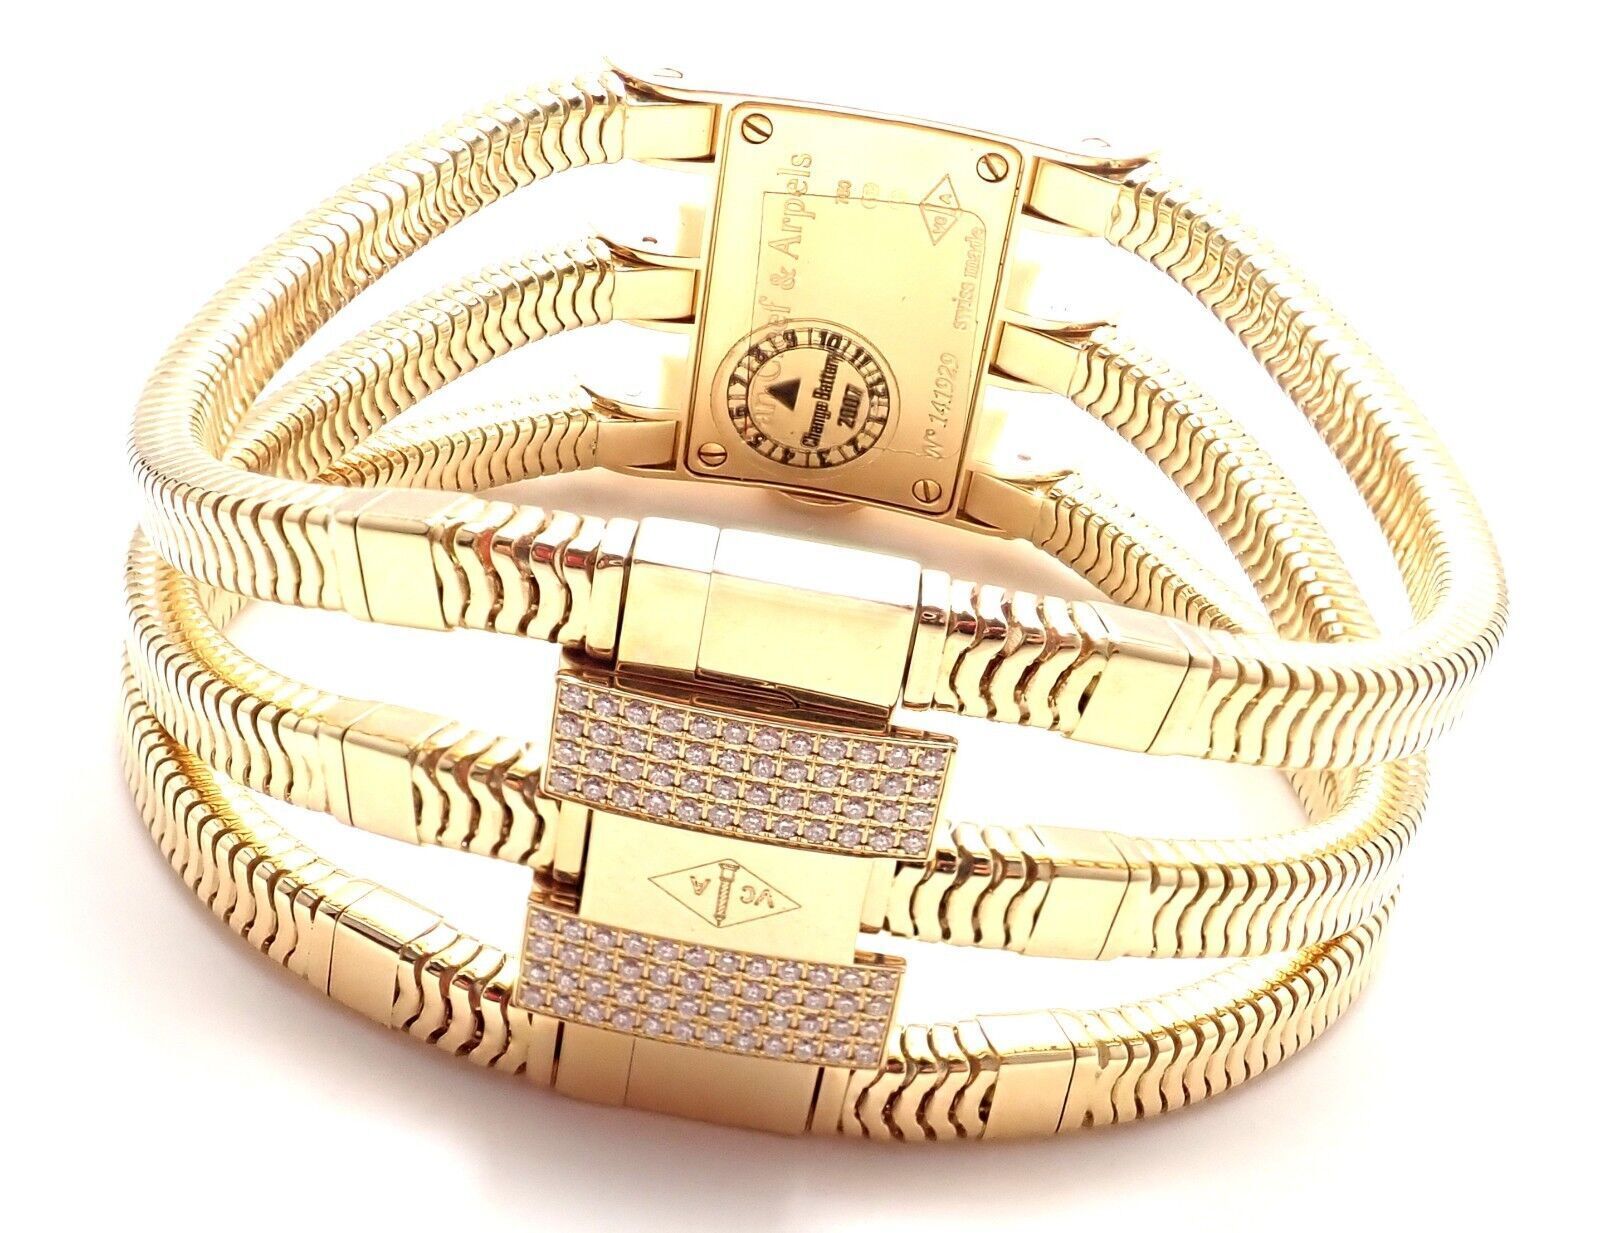 Liane cuff bracelet gold